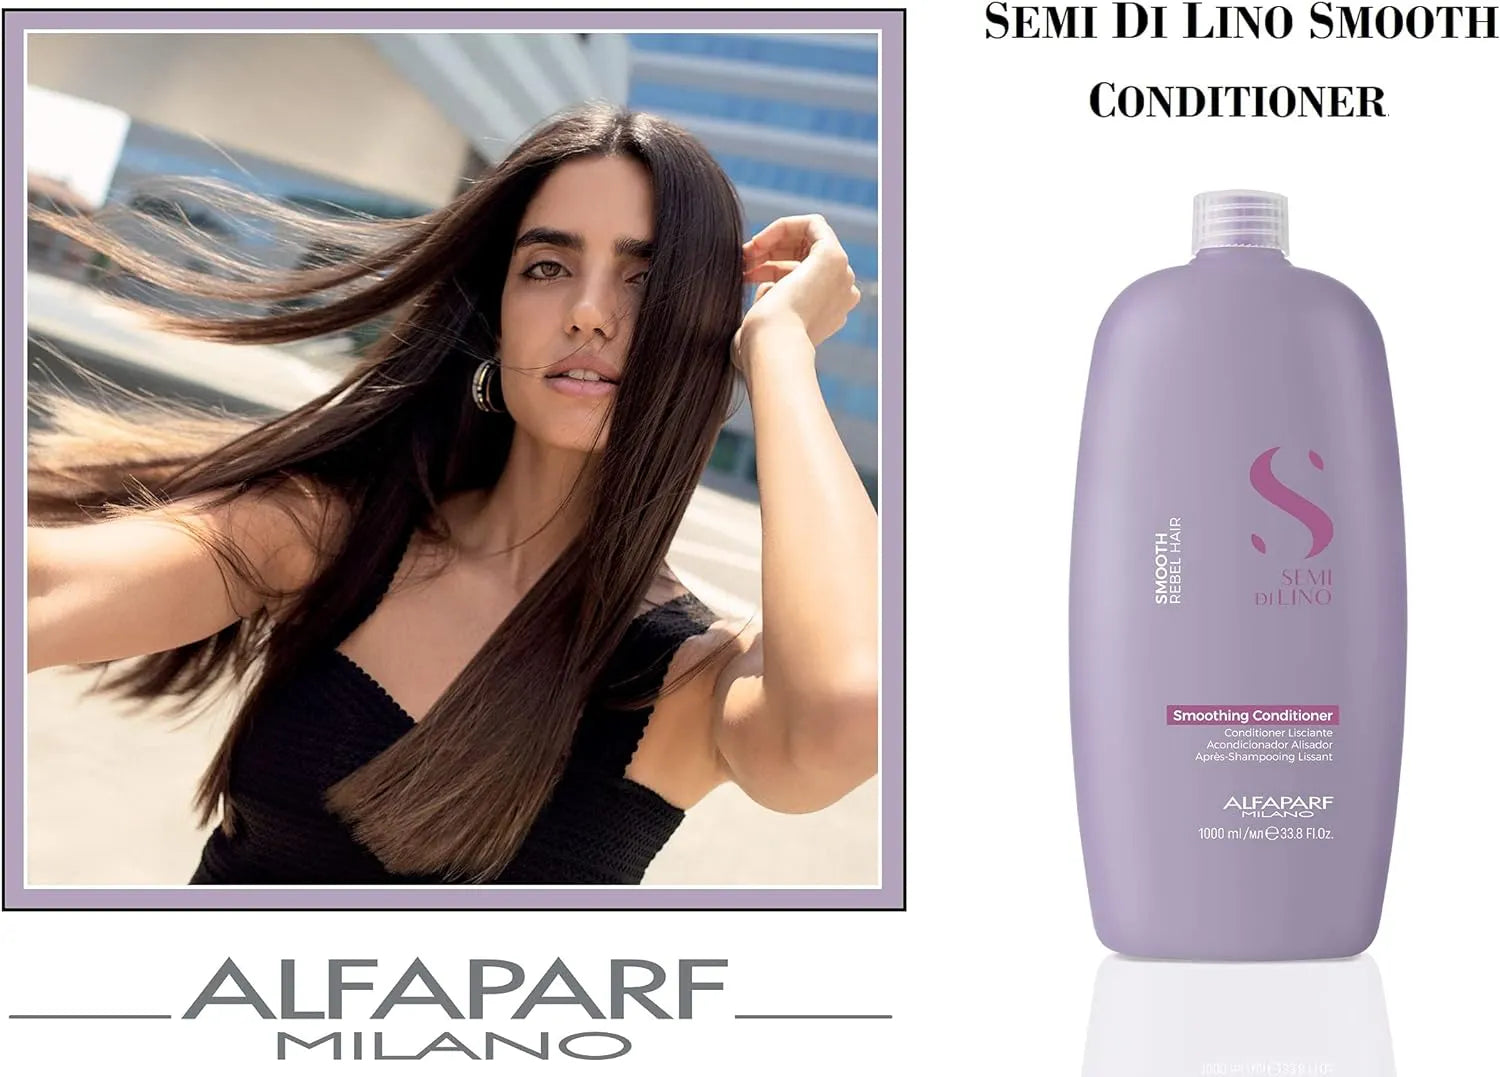 Alfaparf Milano Semi Di Lino Smooth Smoothing Low Shampoo & Conditioner 1 Litre Duo